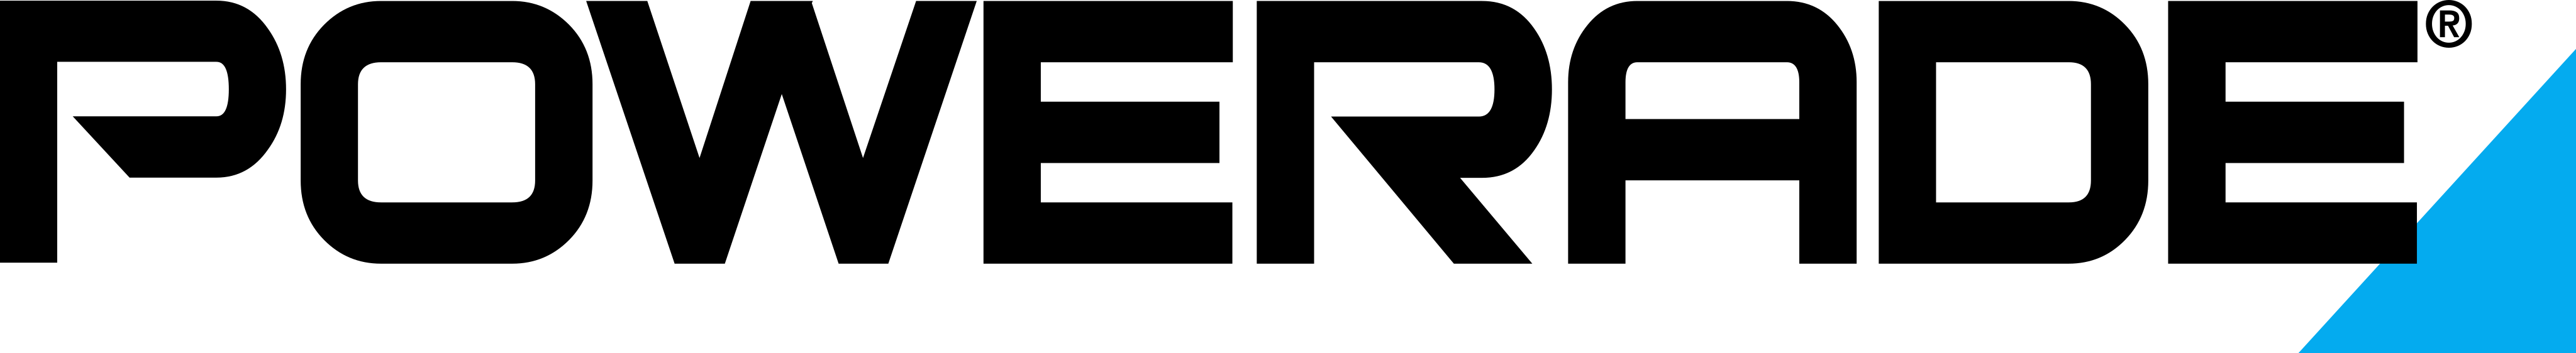 powerade logo 1 - Powerade Logo